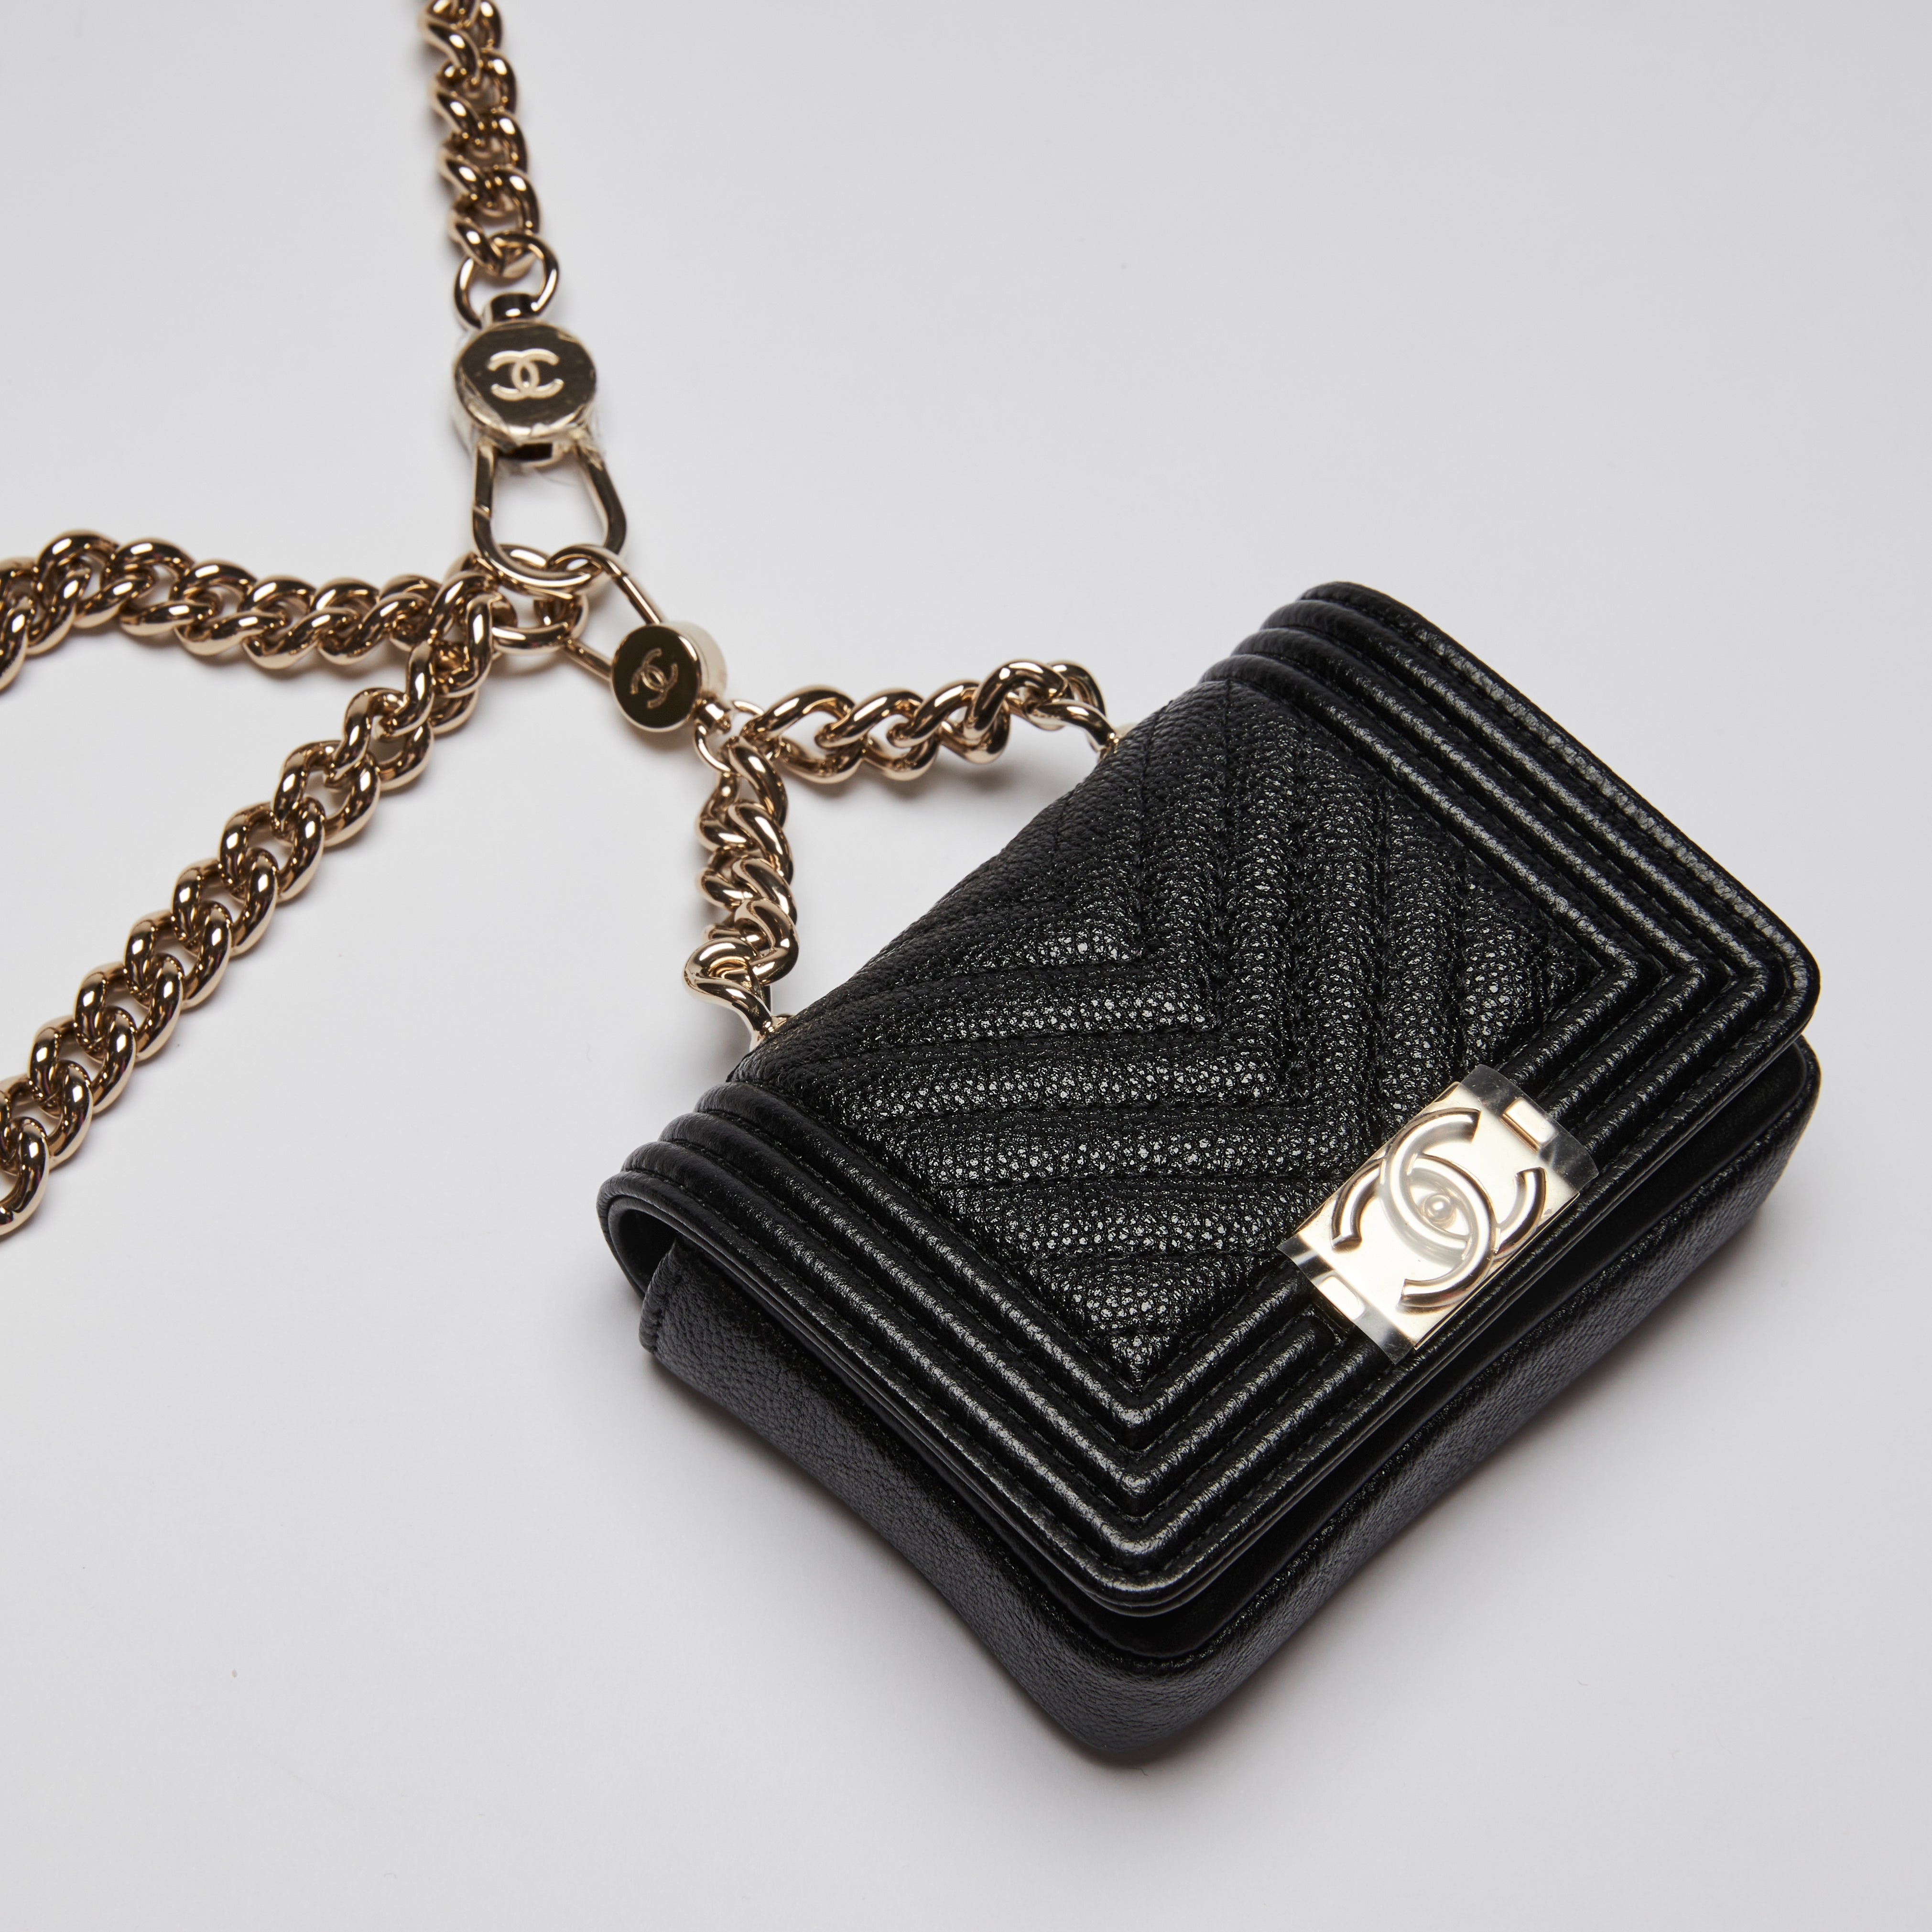 Chanel Mini Black Flap Bag$3,500.00